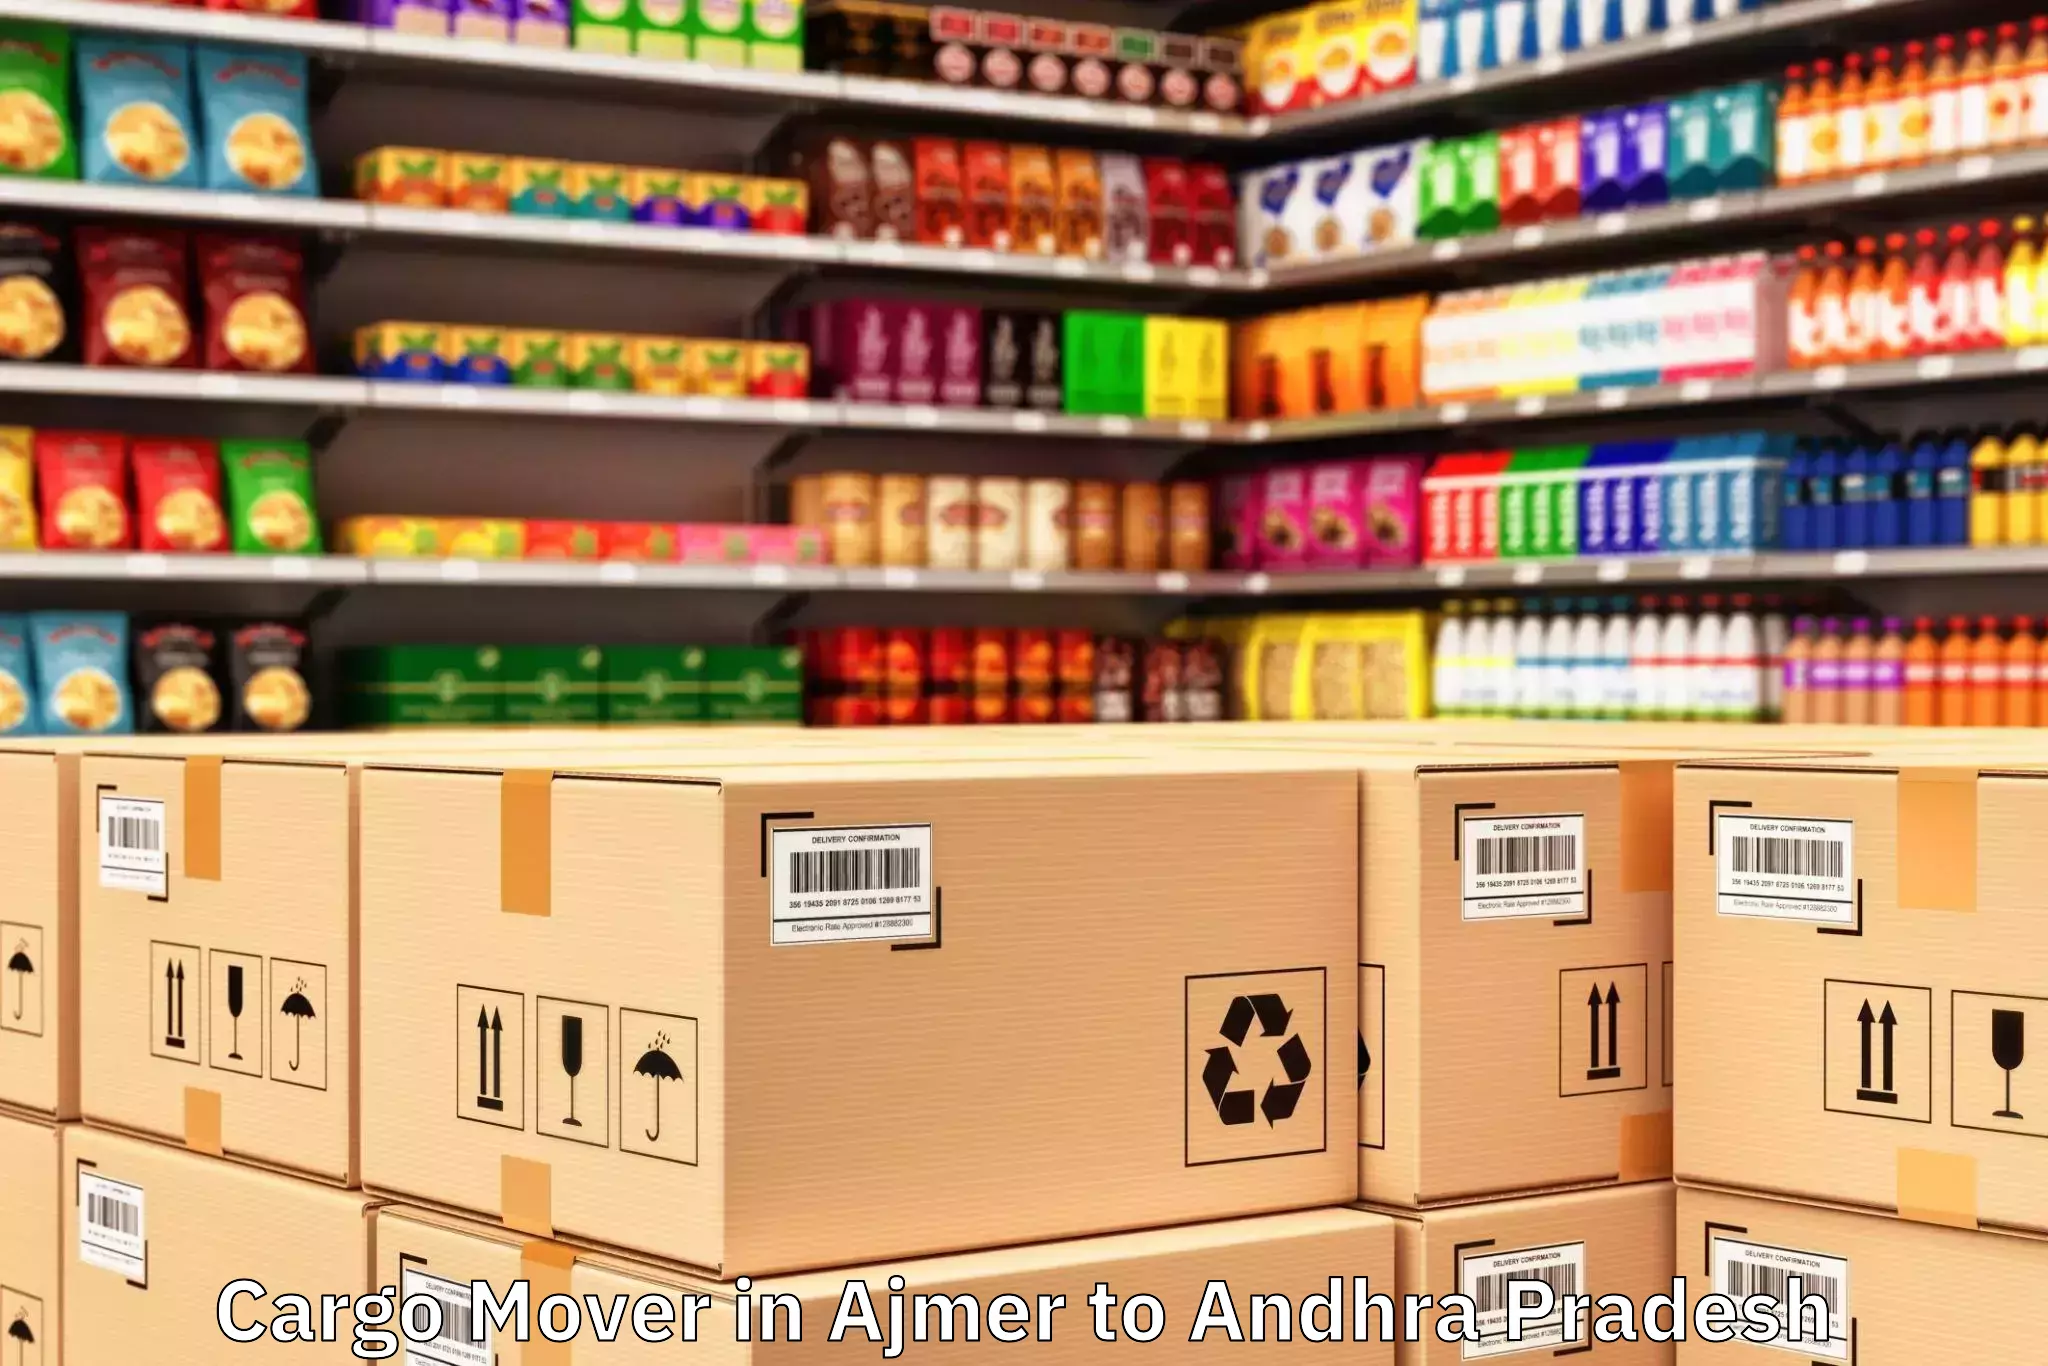 Easy Ajmer to Andhra Pradesh Cargo Mover Booking